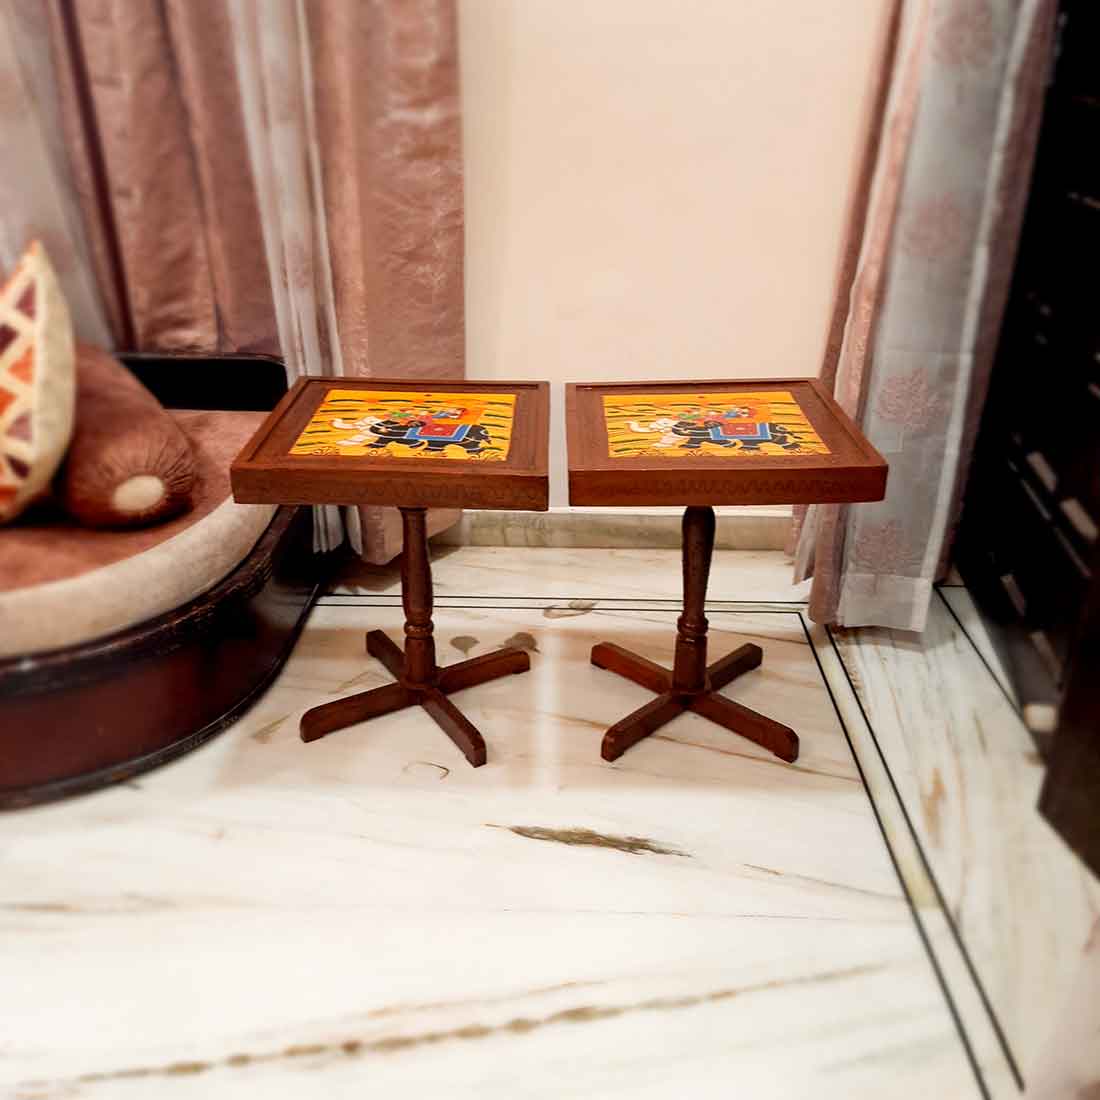 End Tables Wooden | Side Table | Stool - for Living Room, Corner Decor, Home Decor & Gifts - 20 Inch (Set of 2) - apkamart